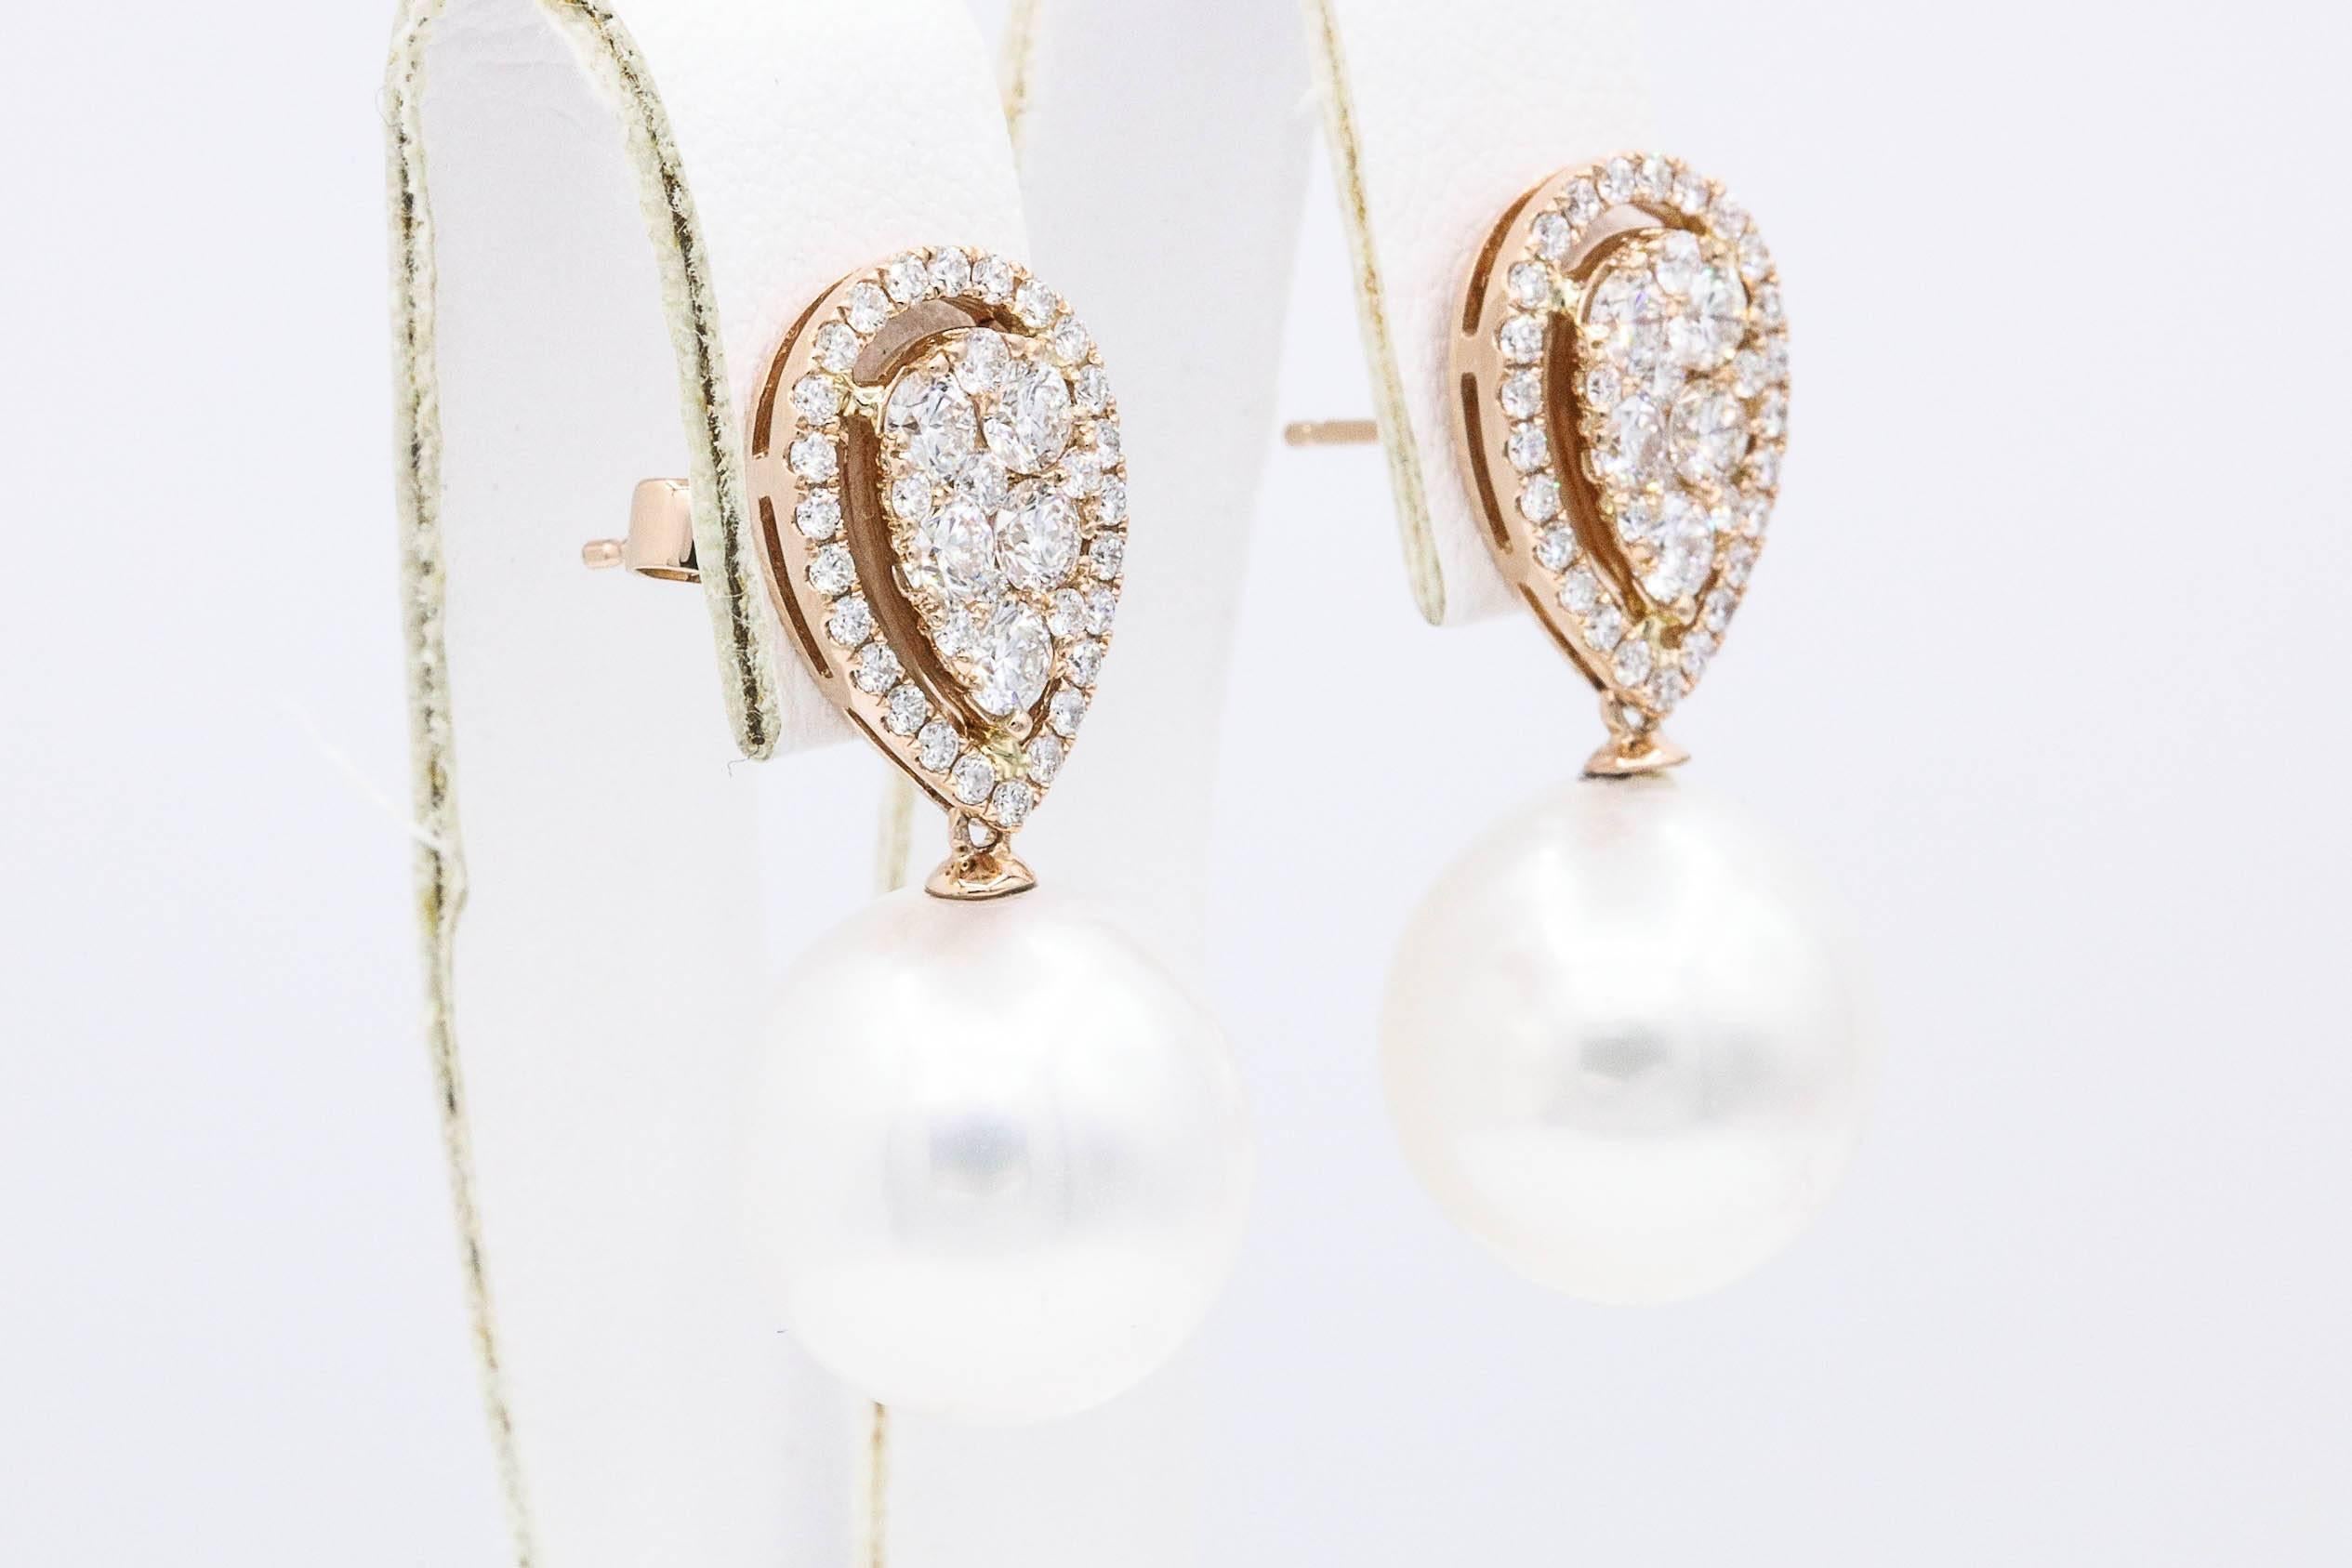 pear shaped pearl drop earrings